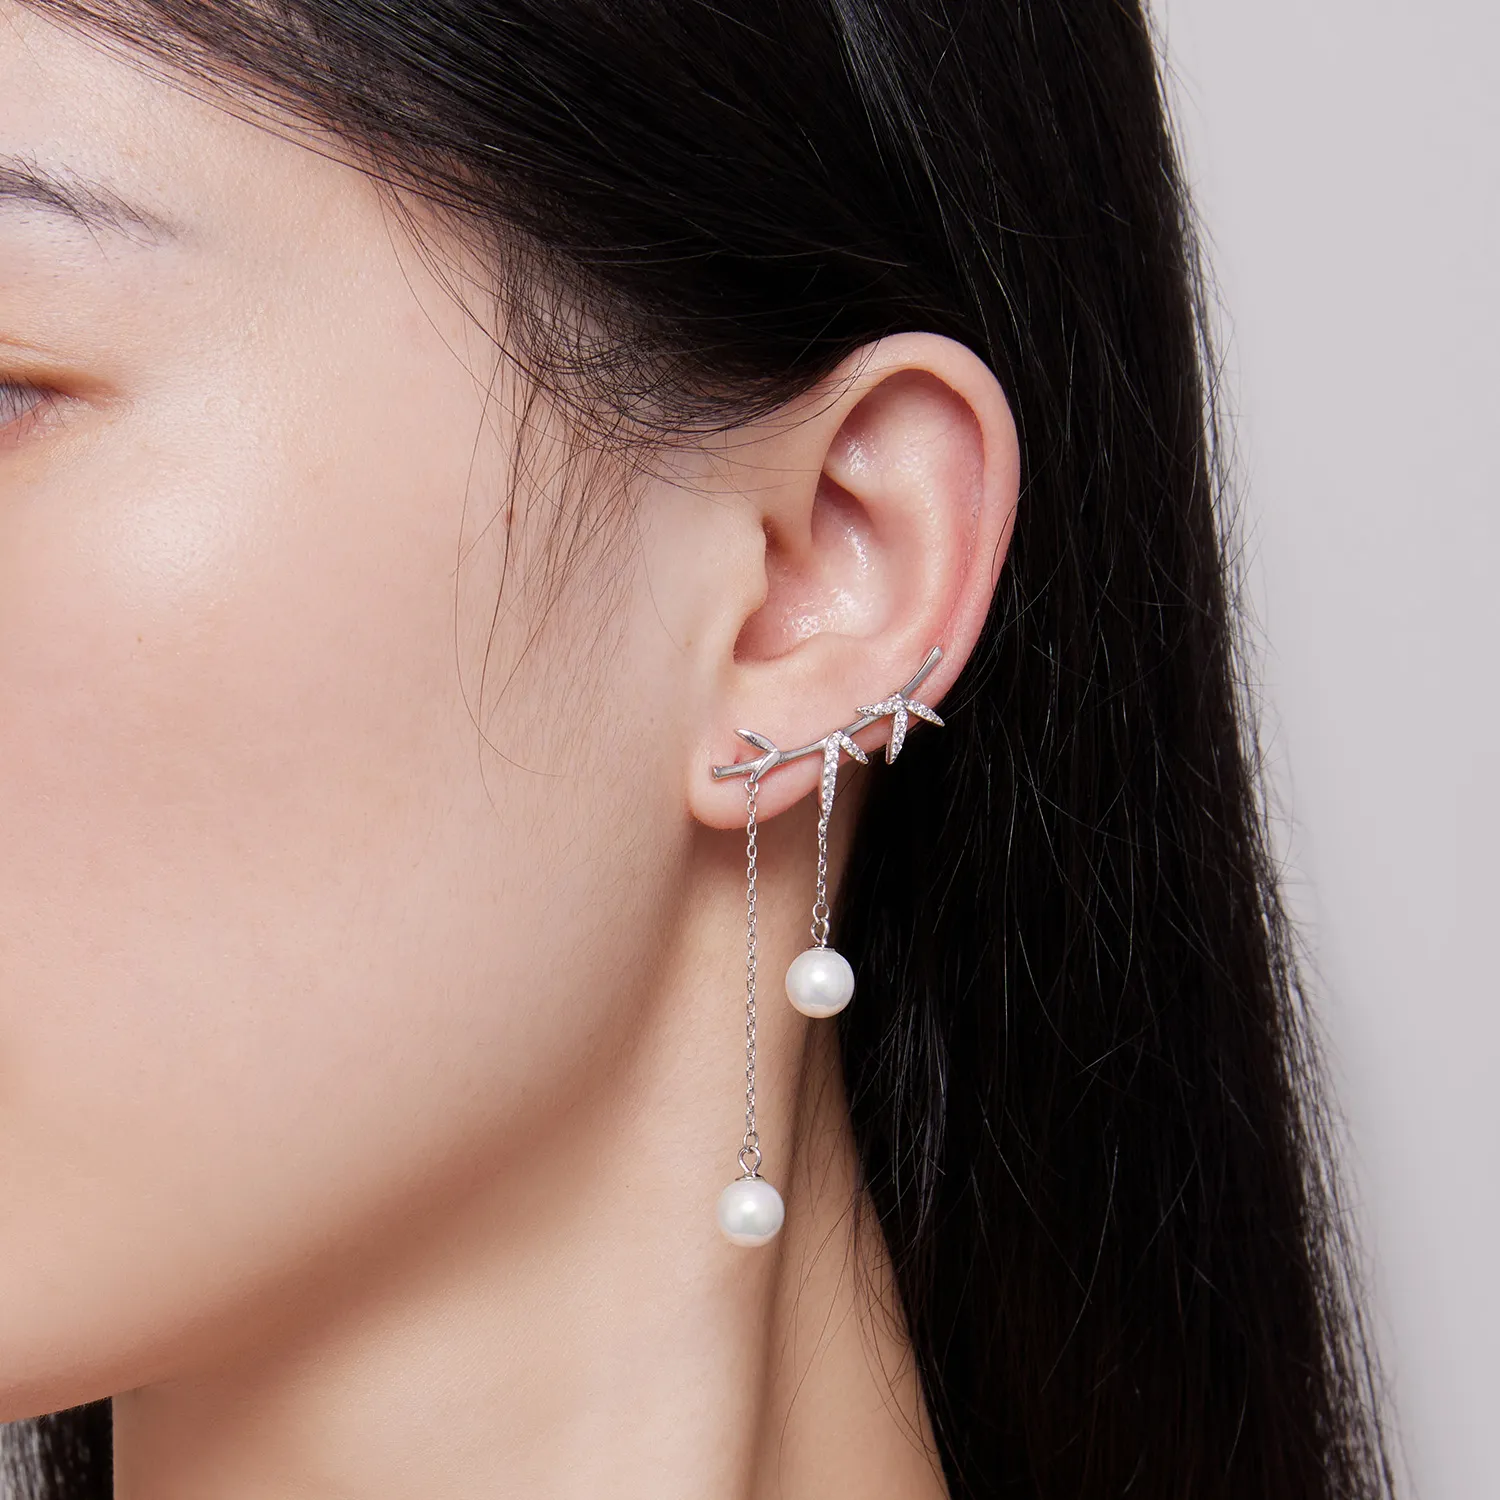 Pandora Style Delicate Bamboo Shell Beads Dangle Earrings - BSE821